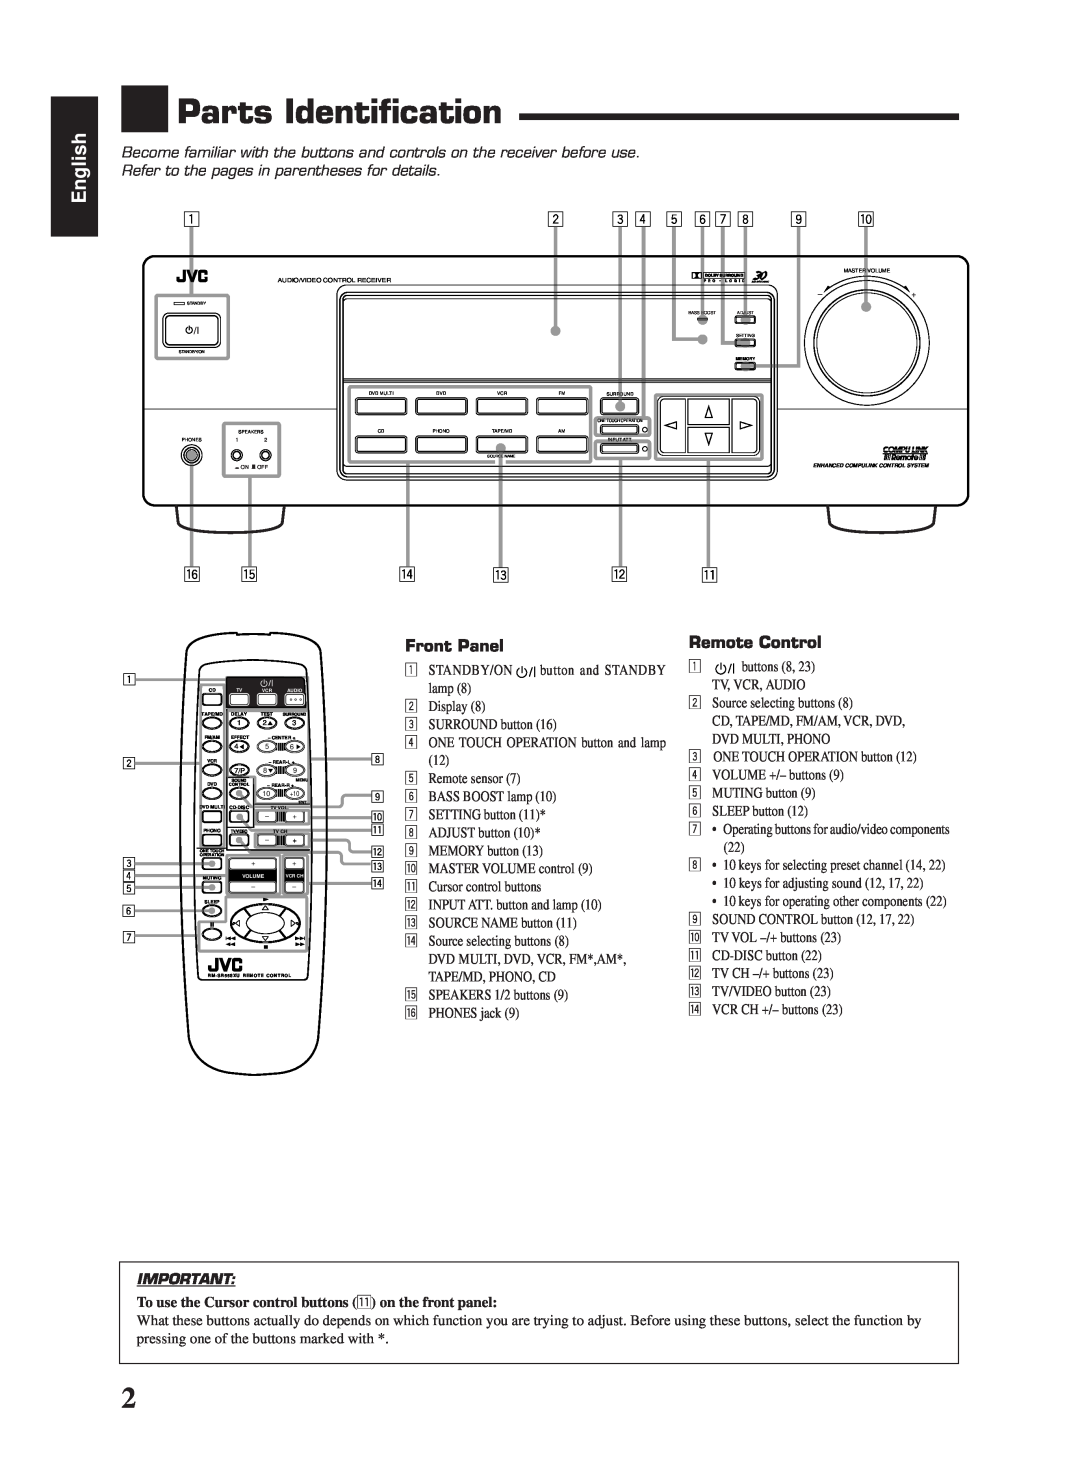 JVC RX-558VBK manual Parts Identification, English, 3 4 5 6, Front Panel, Remote Control 